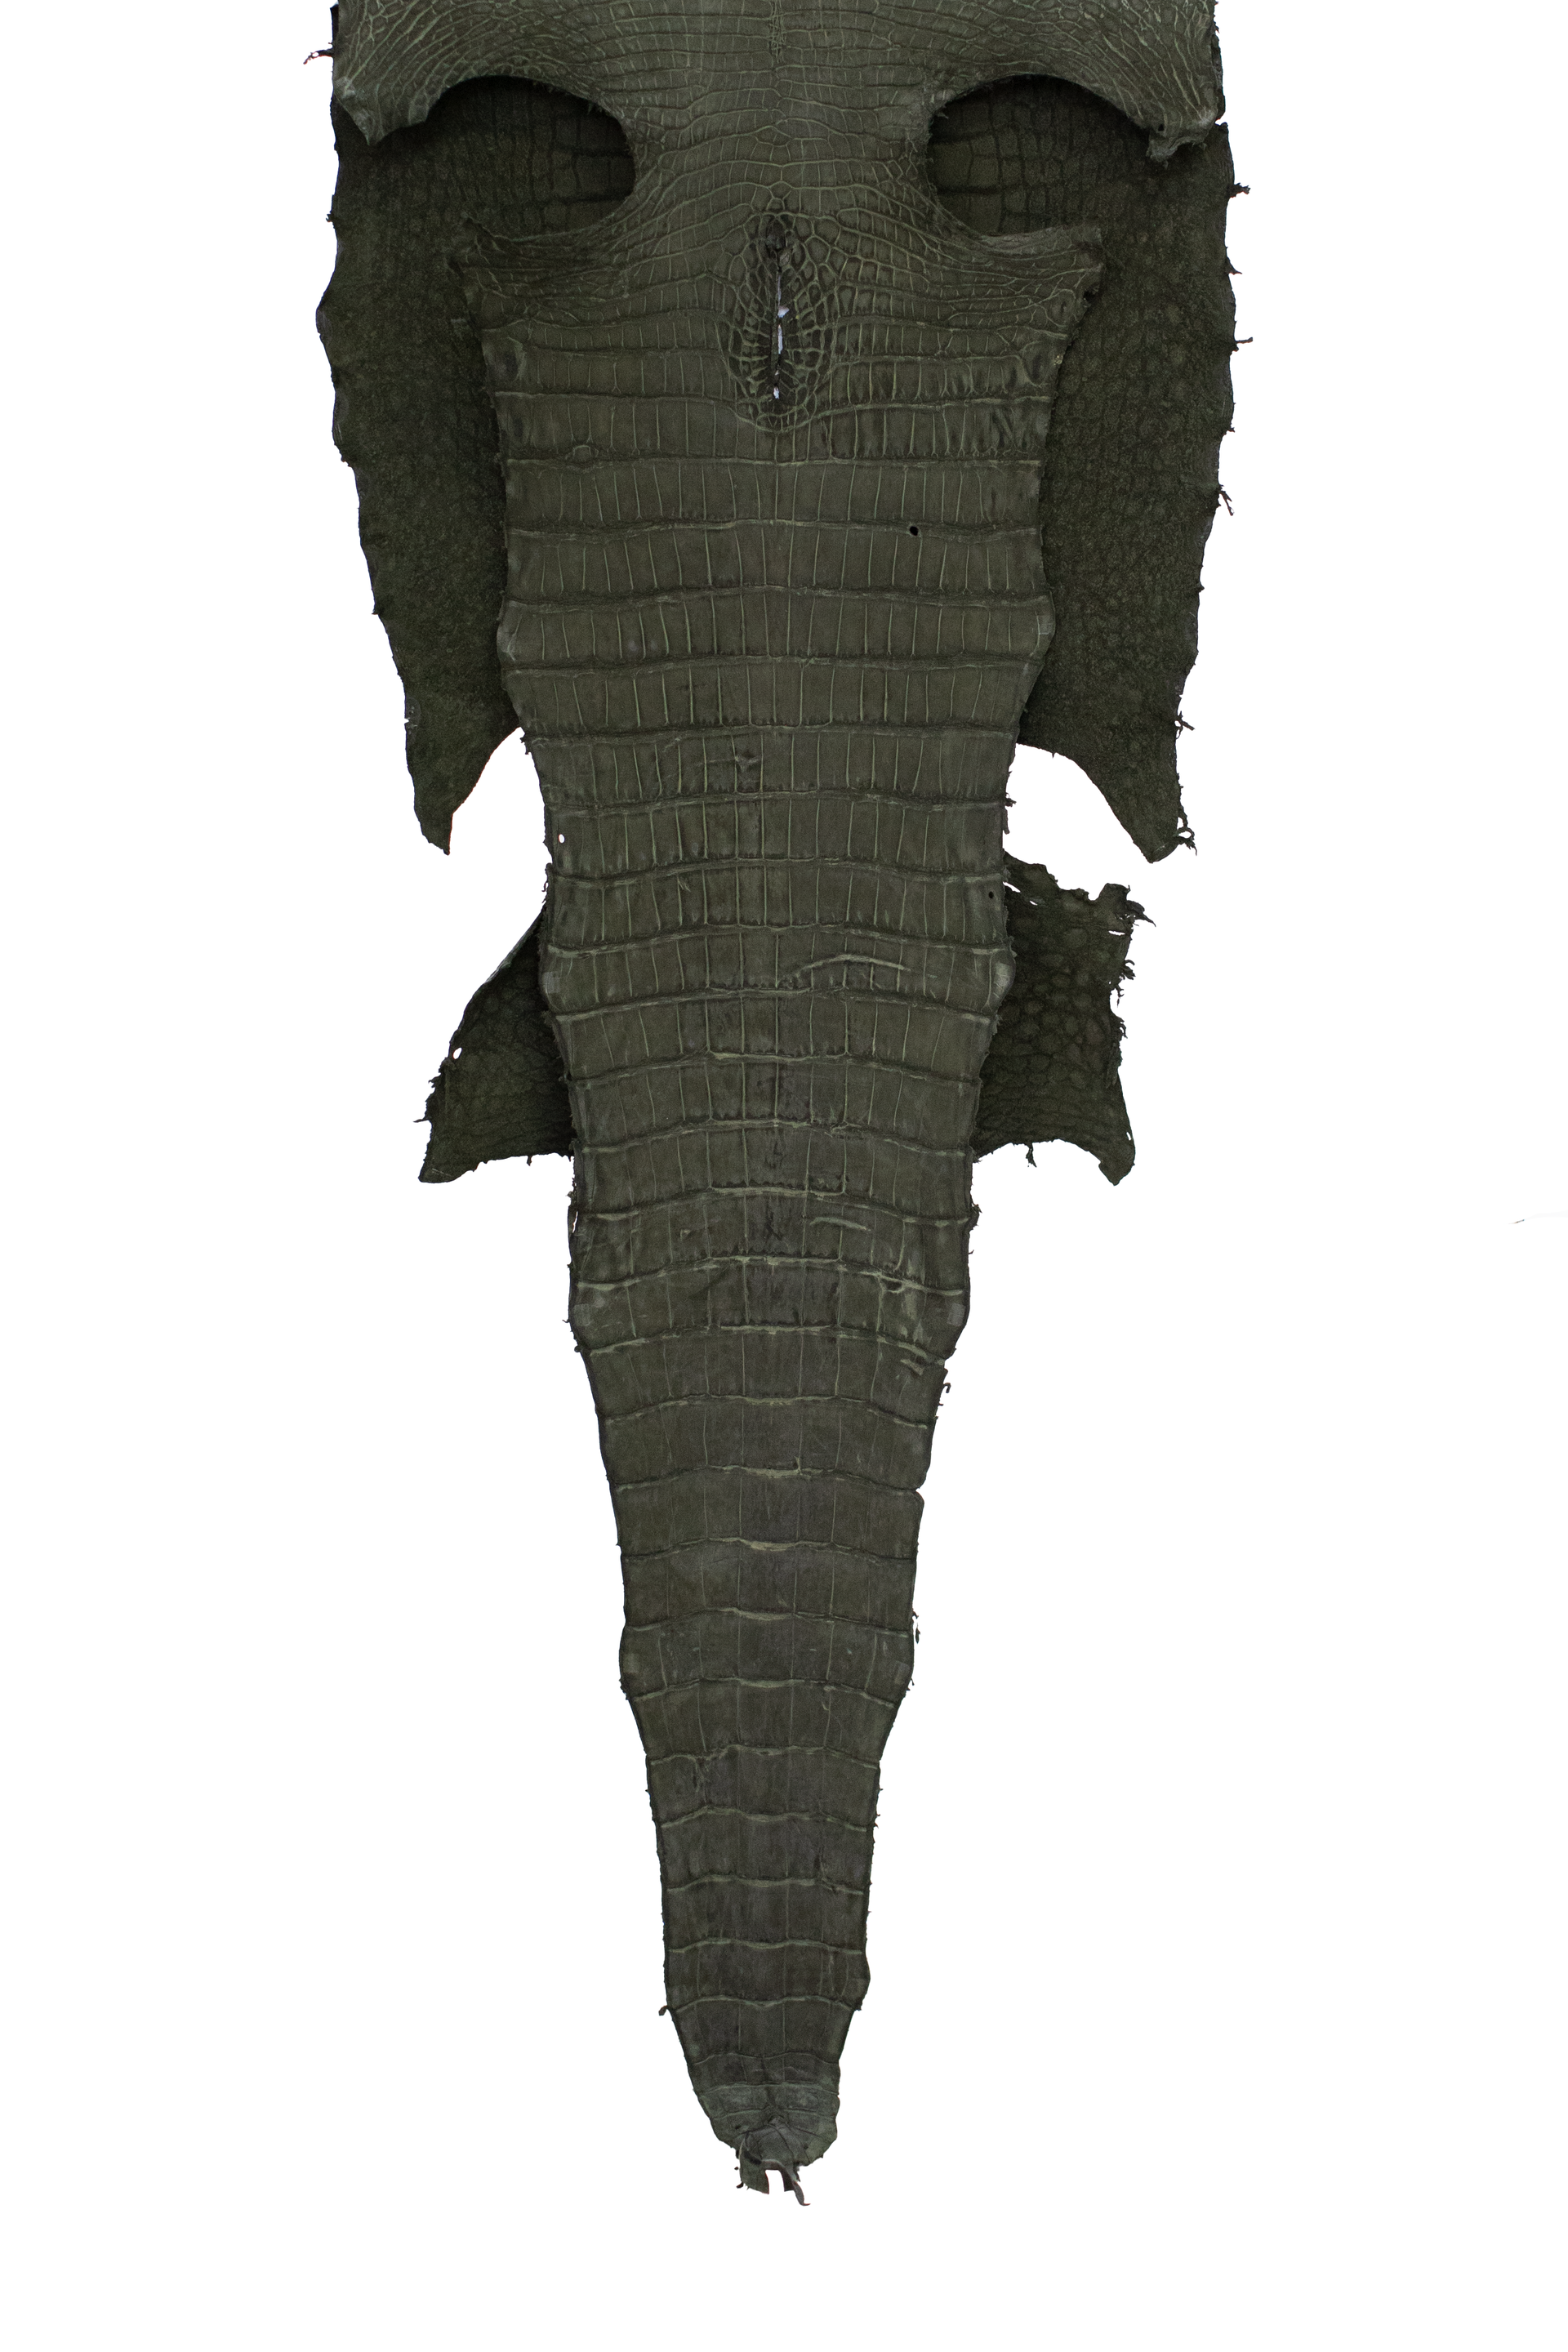 69 cm Grade 2/3 Olive Green Nubuck Wild American Alligator Leather - Tag: FL21-0084799